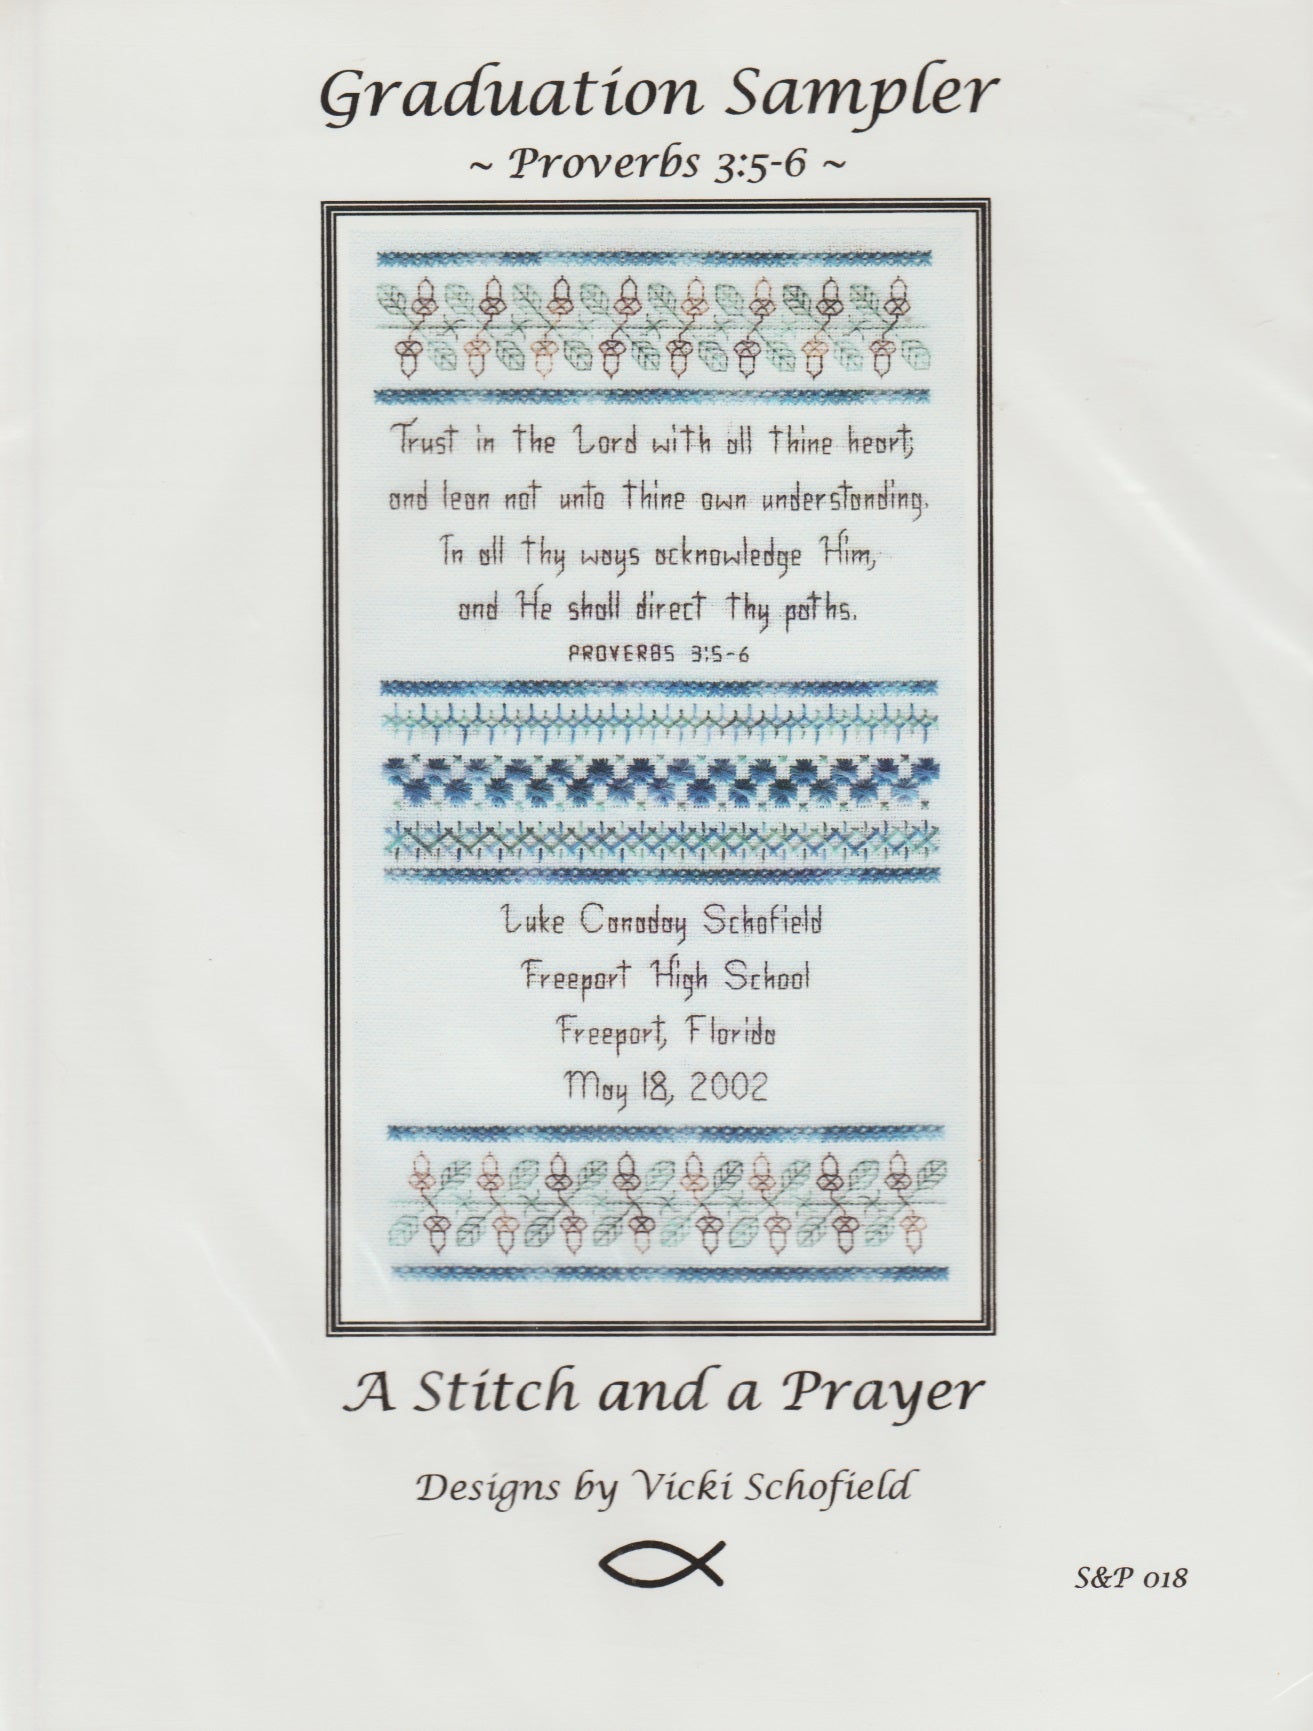 A Stitch and a Prayer Graduation Sampler cross stitch pattern